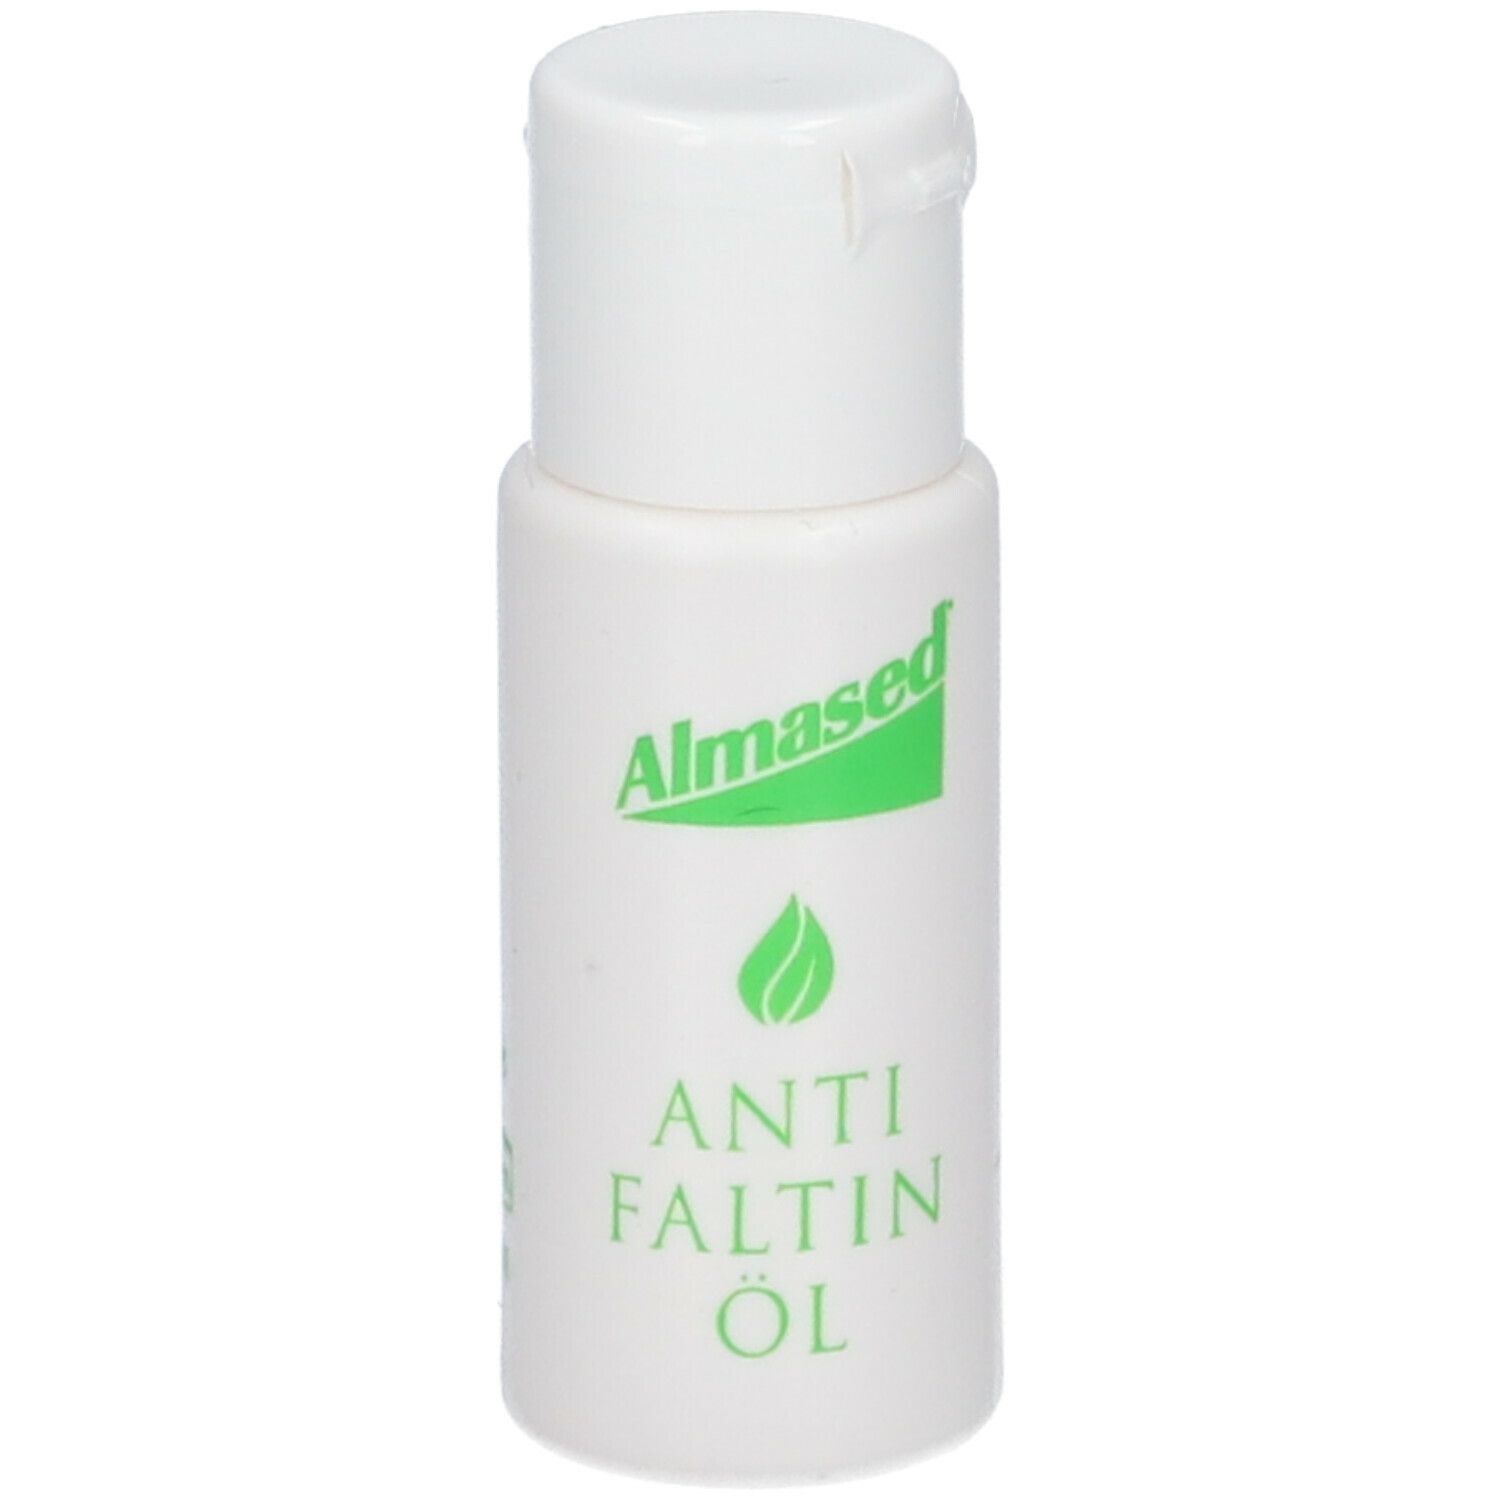 Almased® Antifaltin Öl